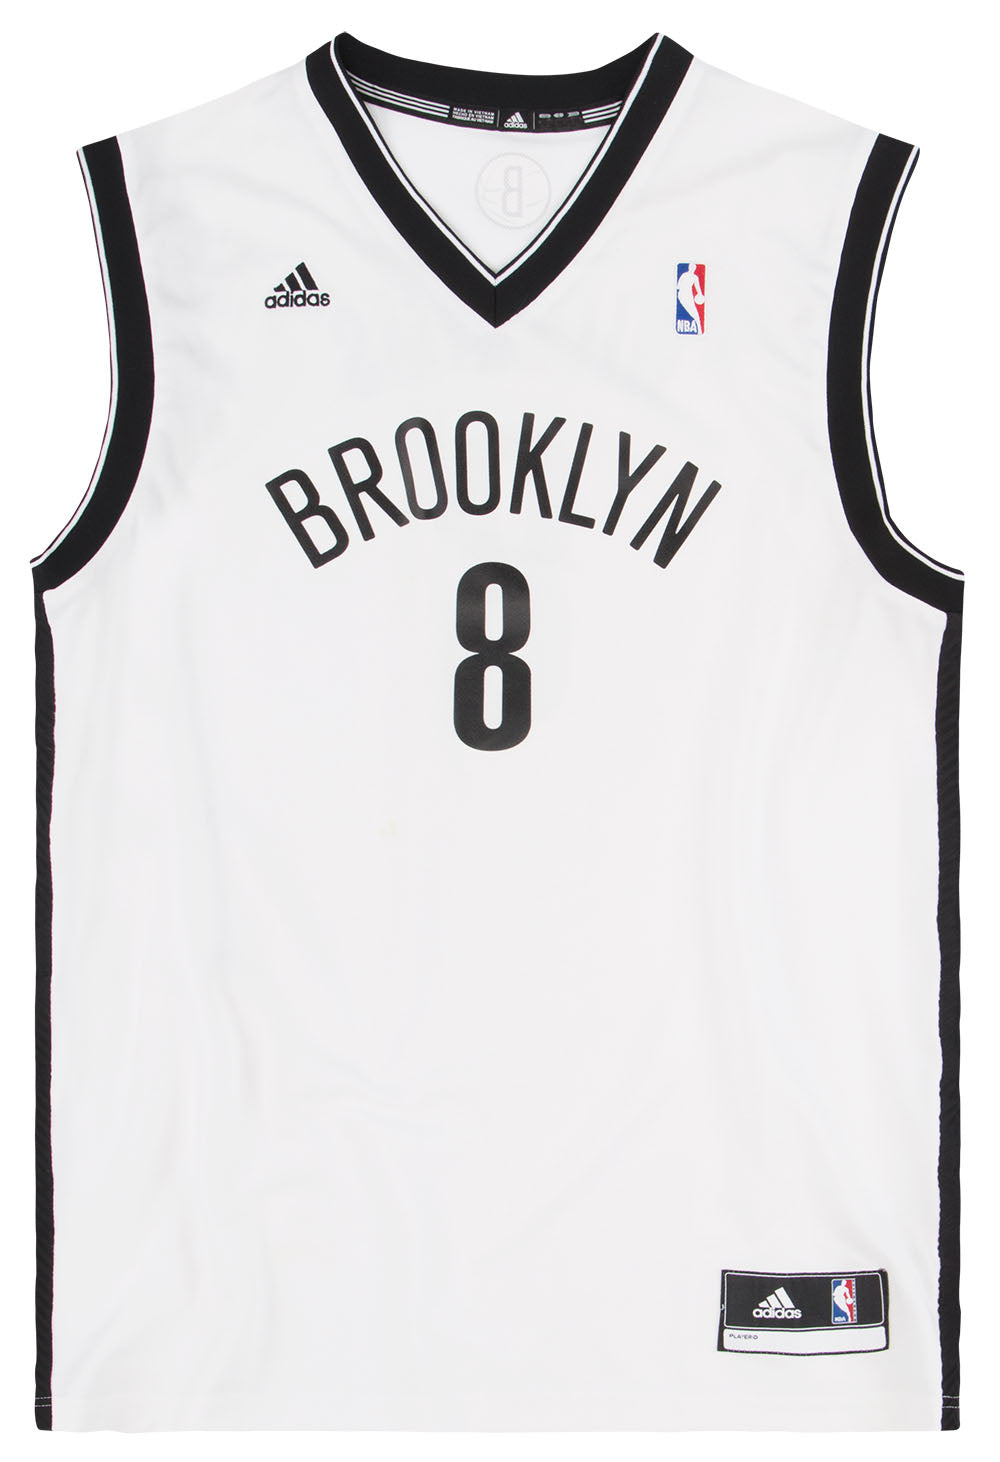 Adidas Brooklyn Nets NBA 1 Basketball Jersey SS Men's sz S Black White  7912A